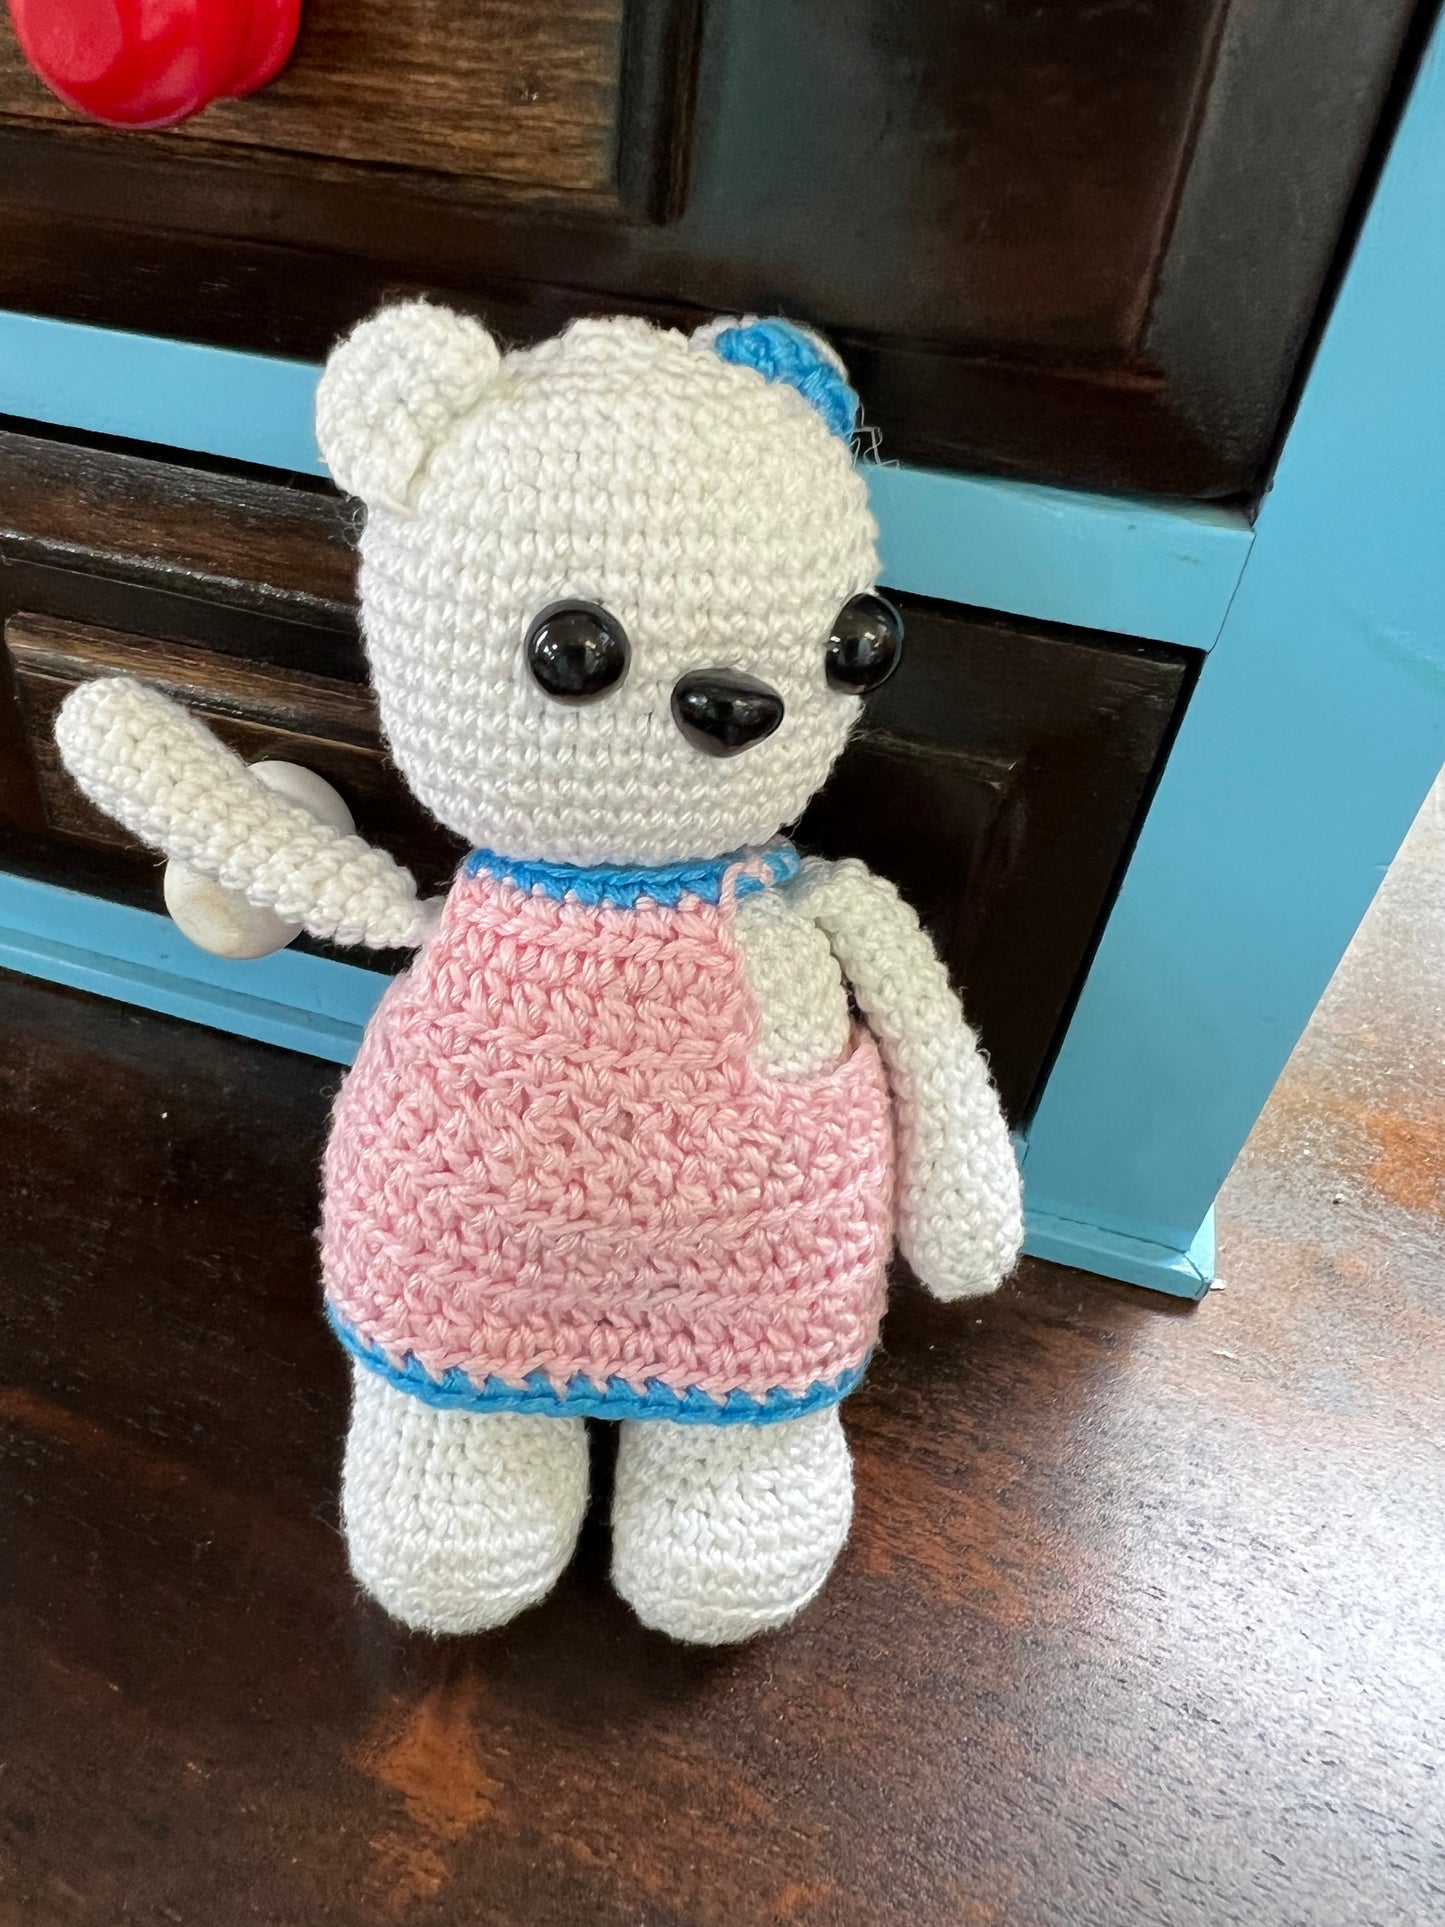 Crochet by Mabel